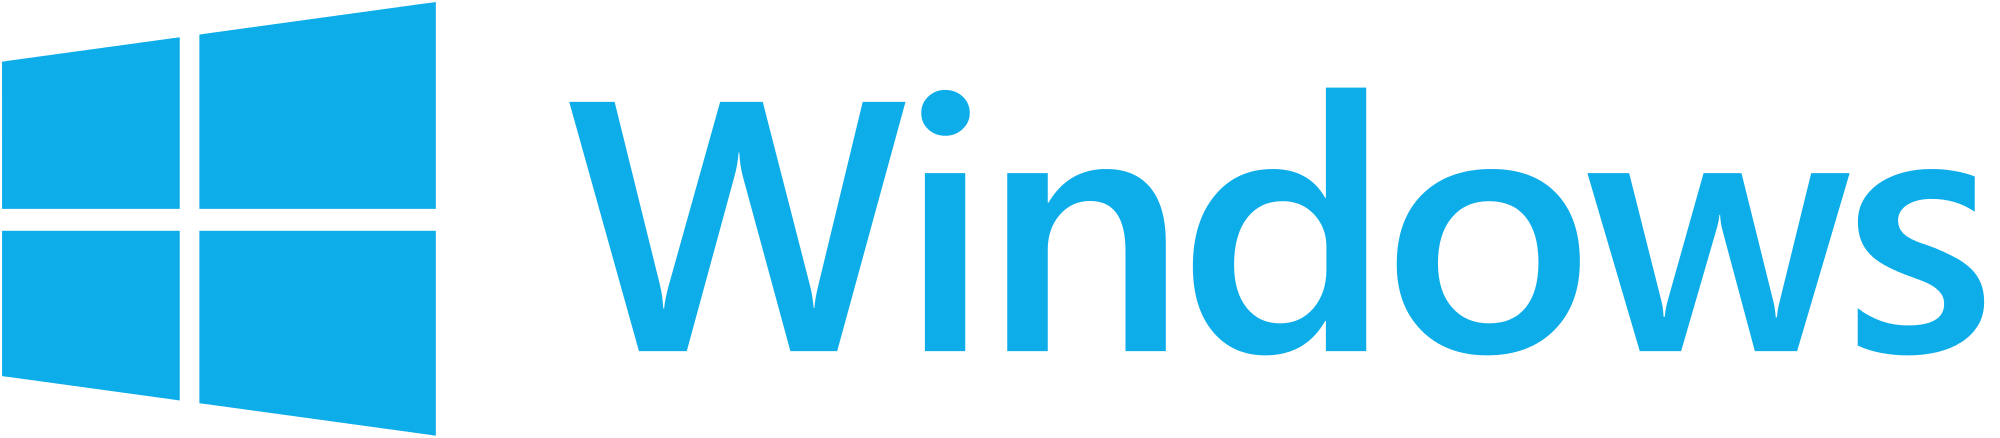 Microsoft Windows Azure Logo - File:Windows logo and wordmark - 2012.svg - Wikimedia Commons